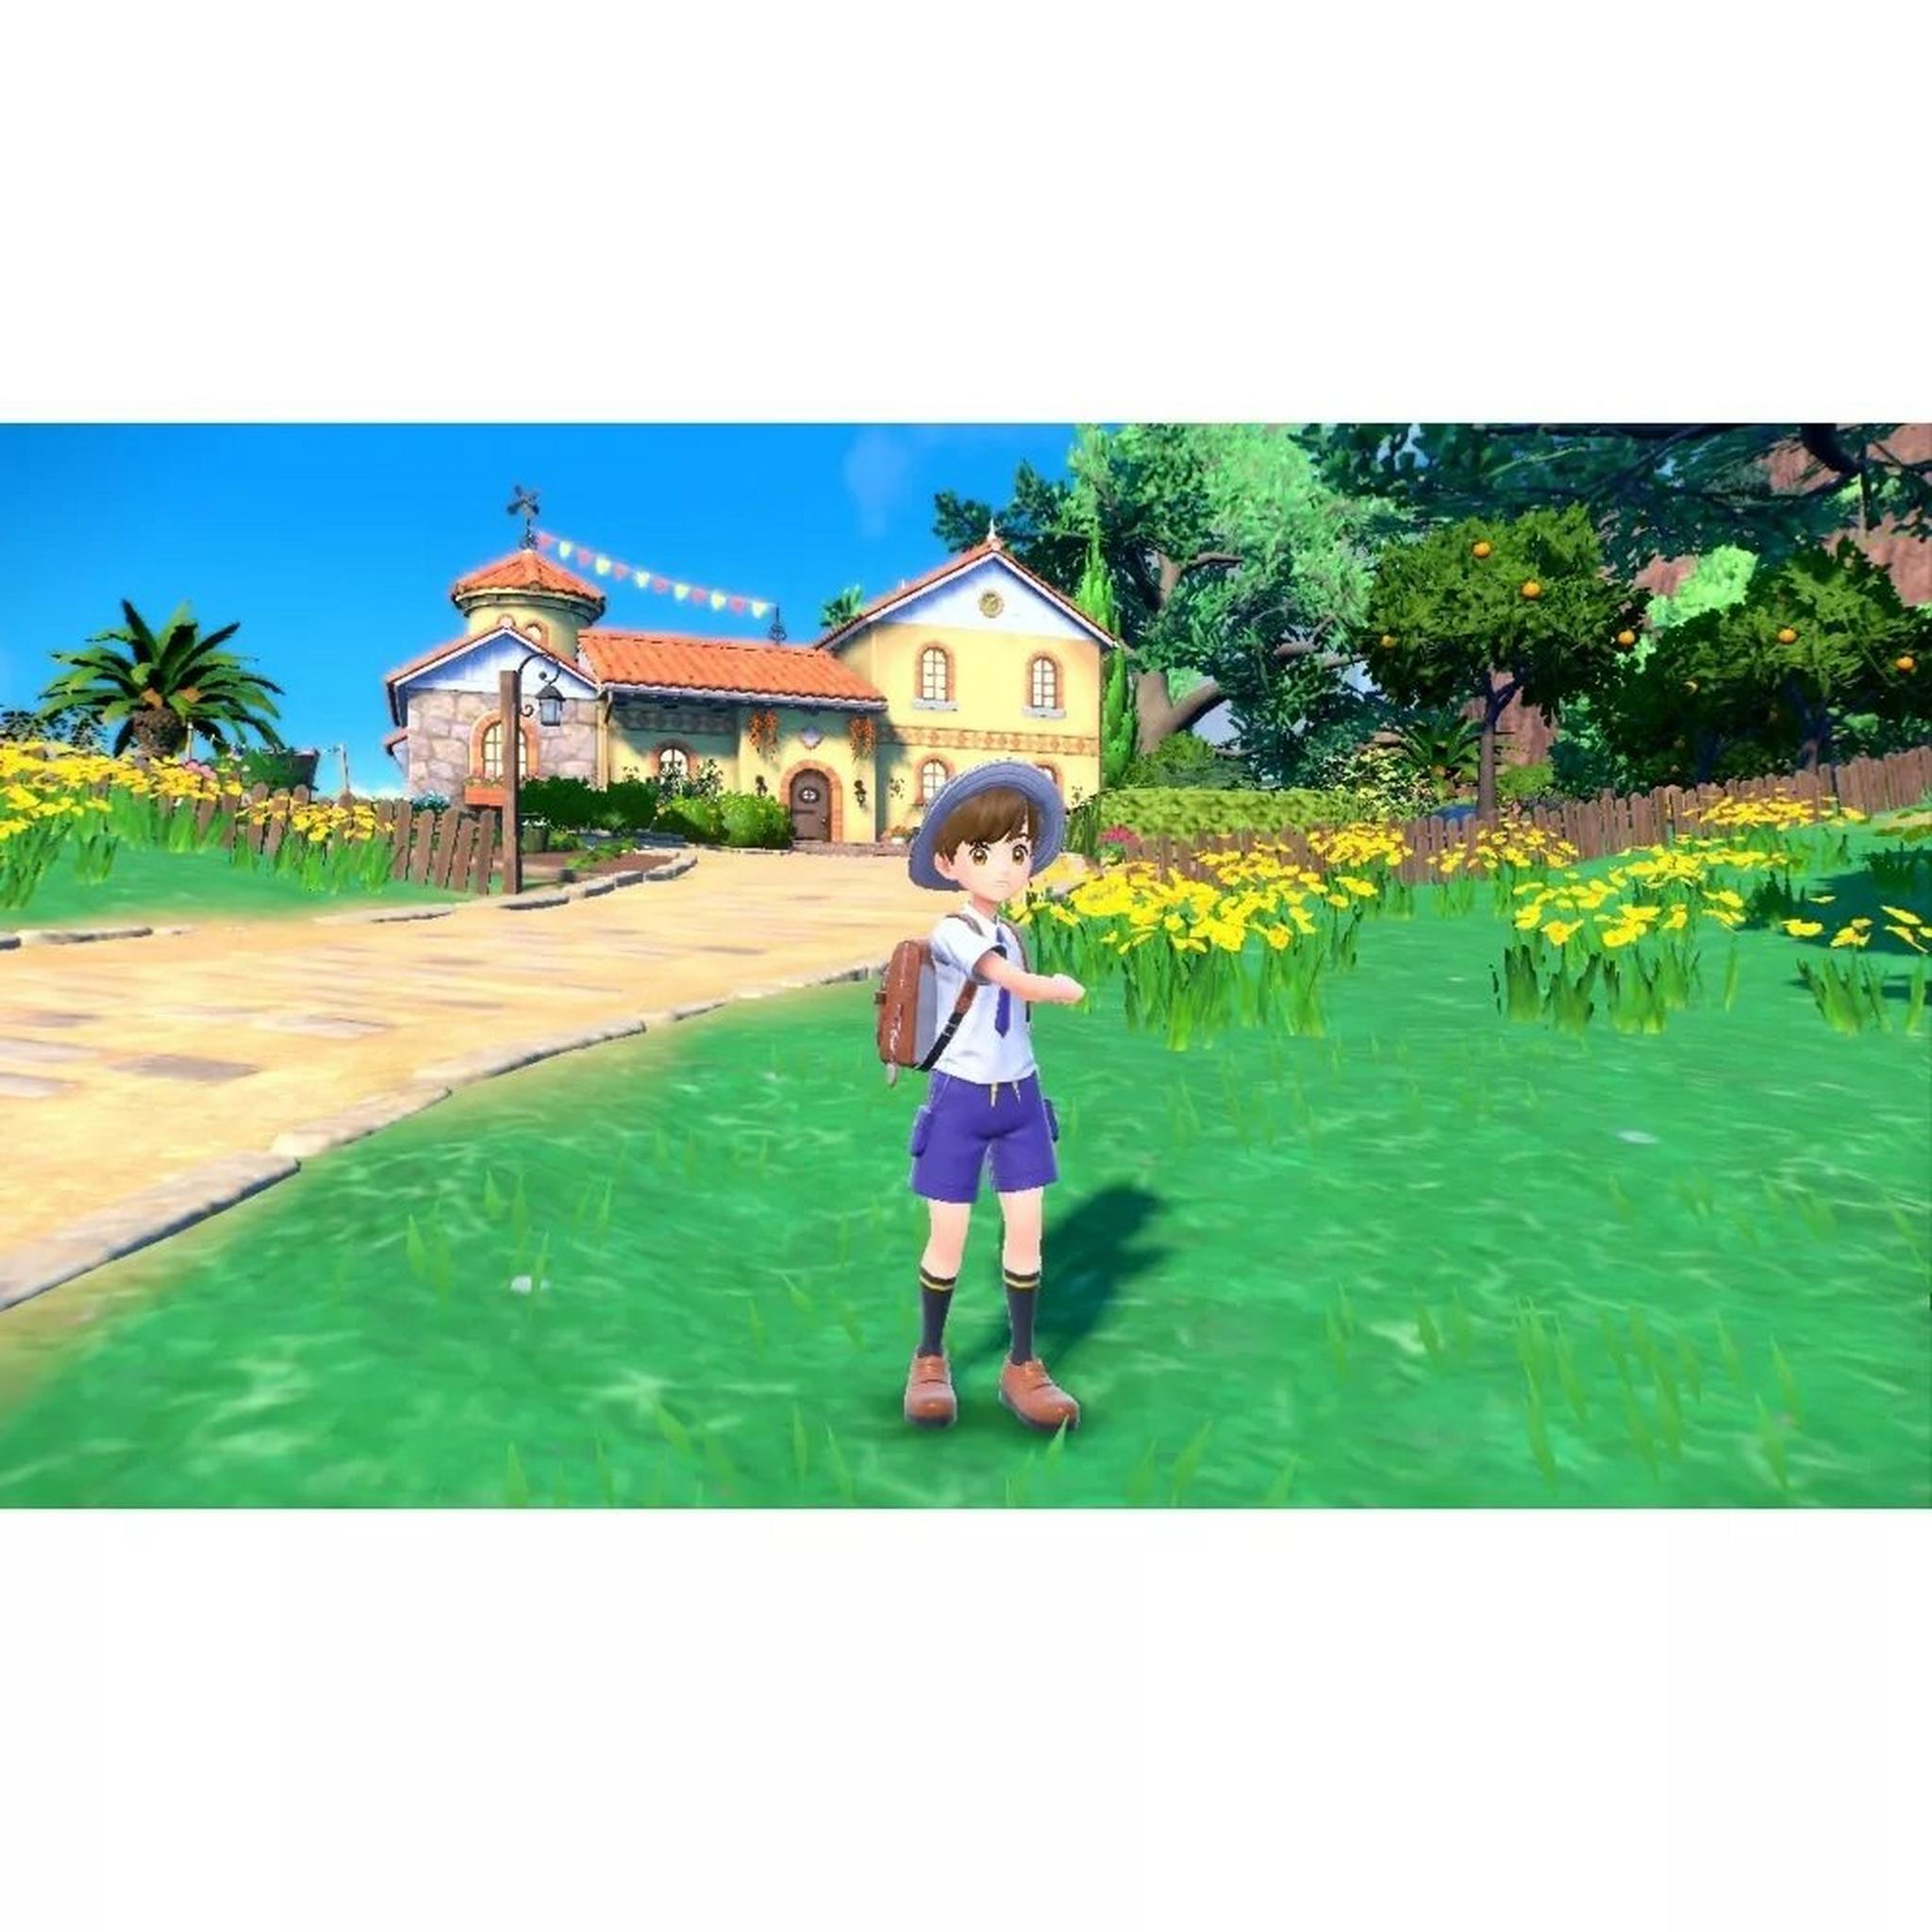 Pokémon Violet - Nintendo Switch Game, Nintendo Switch (OLED Model), Nintendo Switch Lite